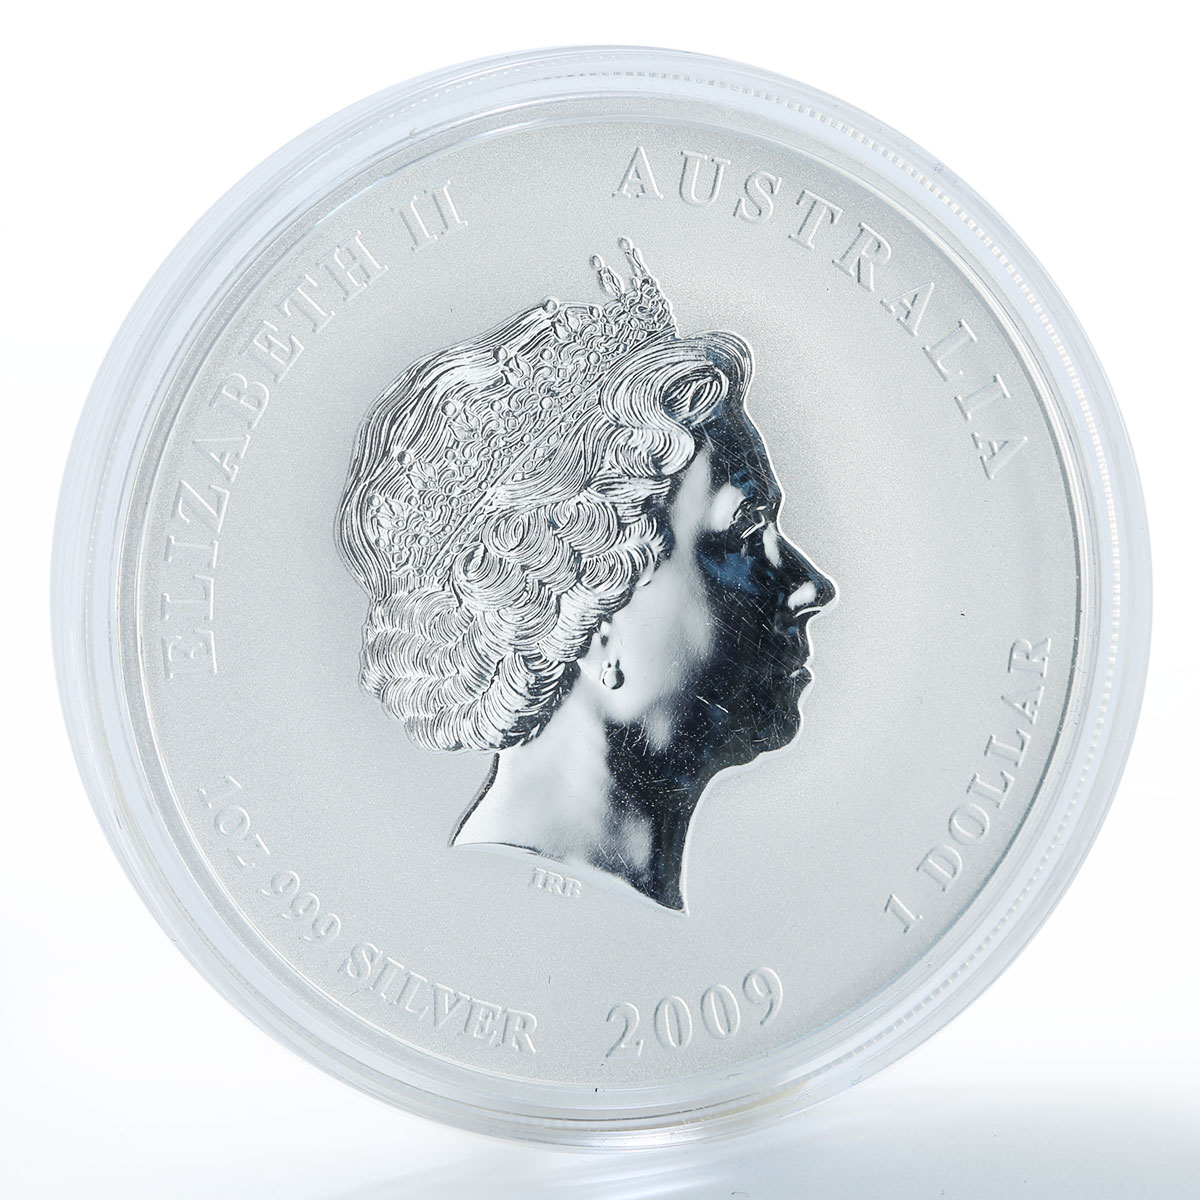 Australia, 1 dollar, Year of the Ox, Lunar, Series II silver gilded, 2009